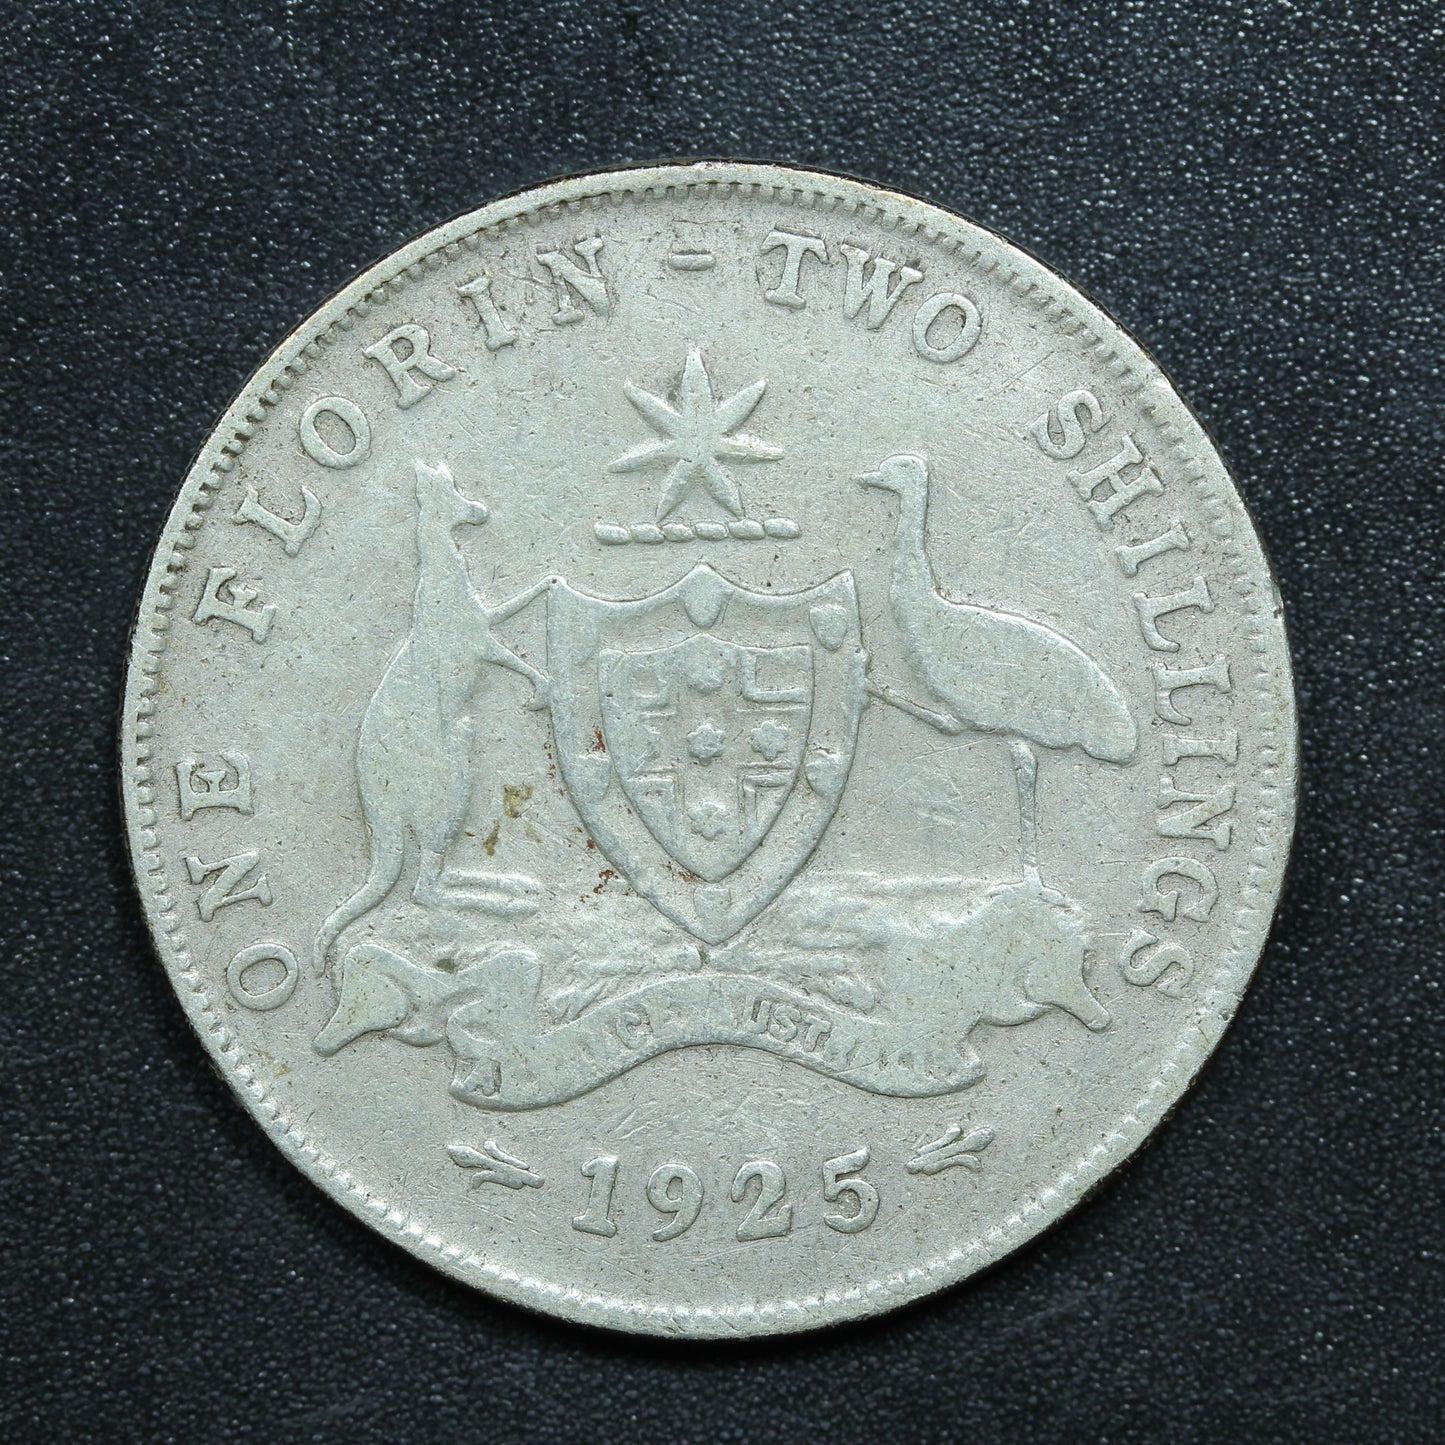 1925 Australia 2 Shillings 1 Florin Silver Coin KM# 27